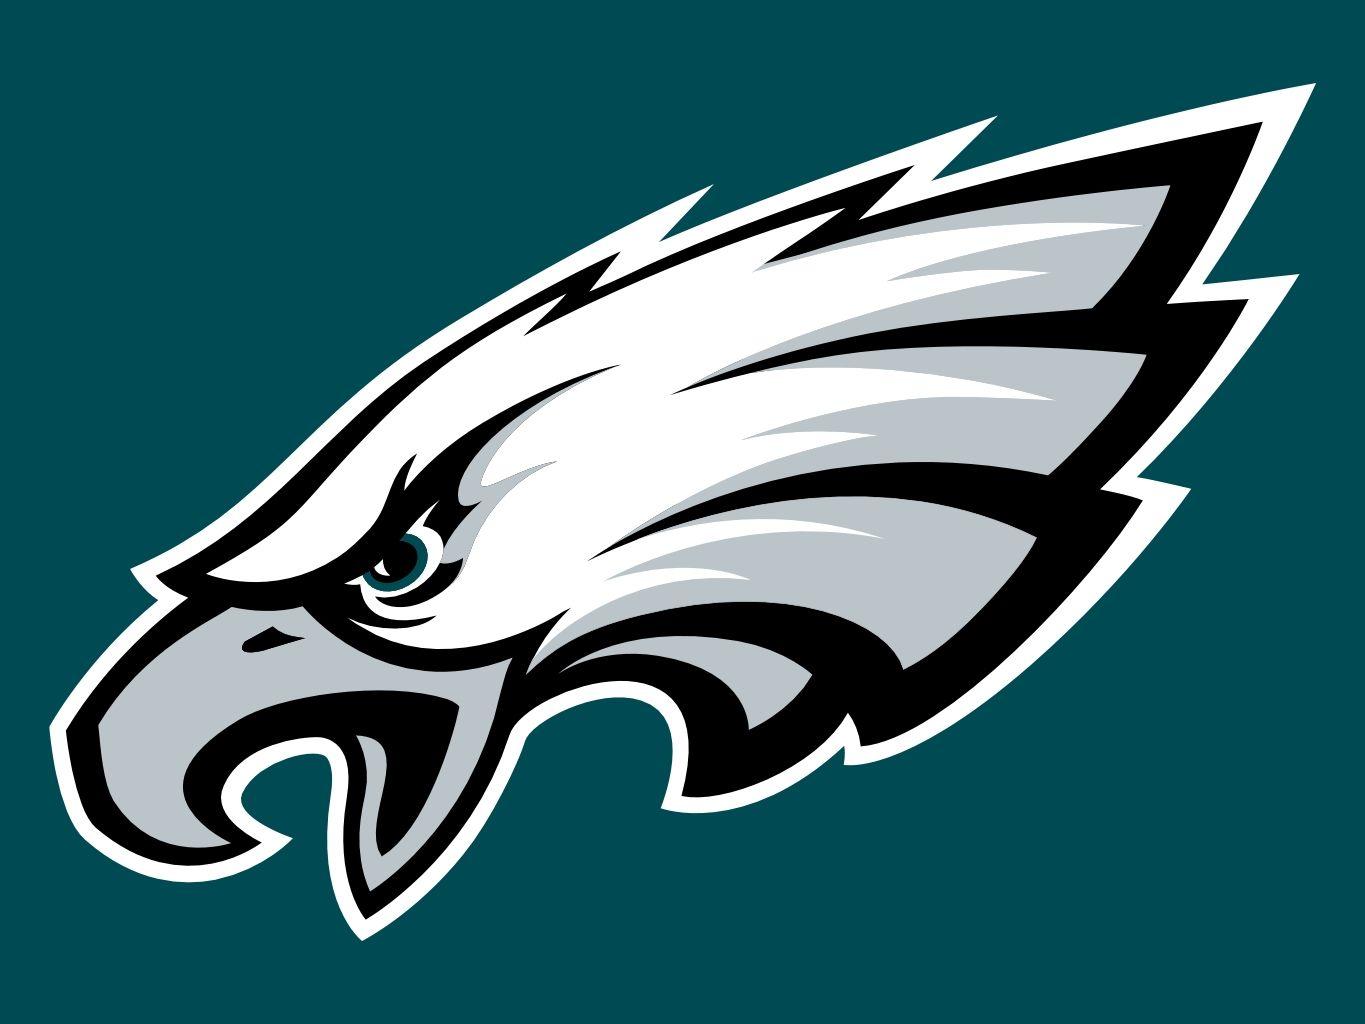 Eagels Logo - Philadelphia Eagles Logos Pictures Clipart - Free Clip Art Images ...